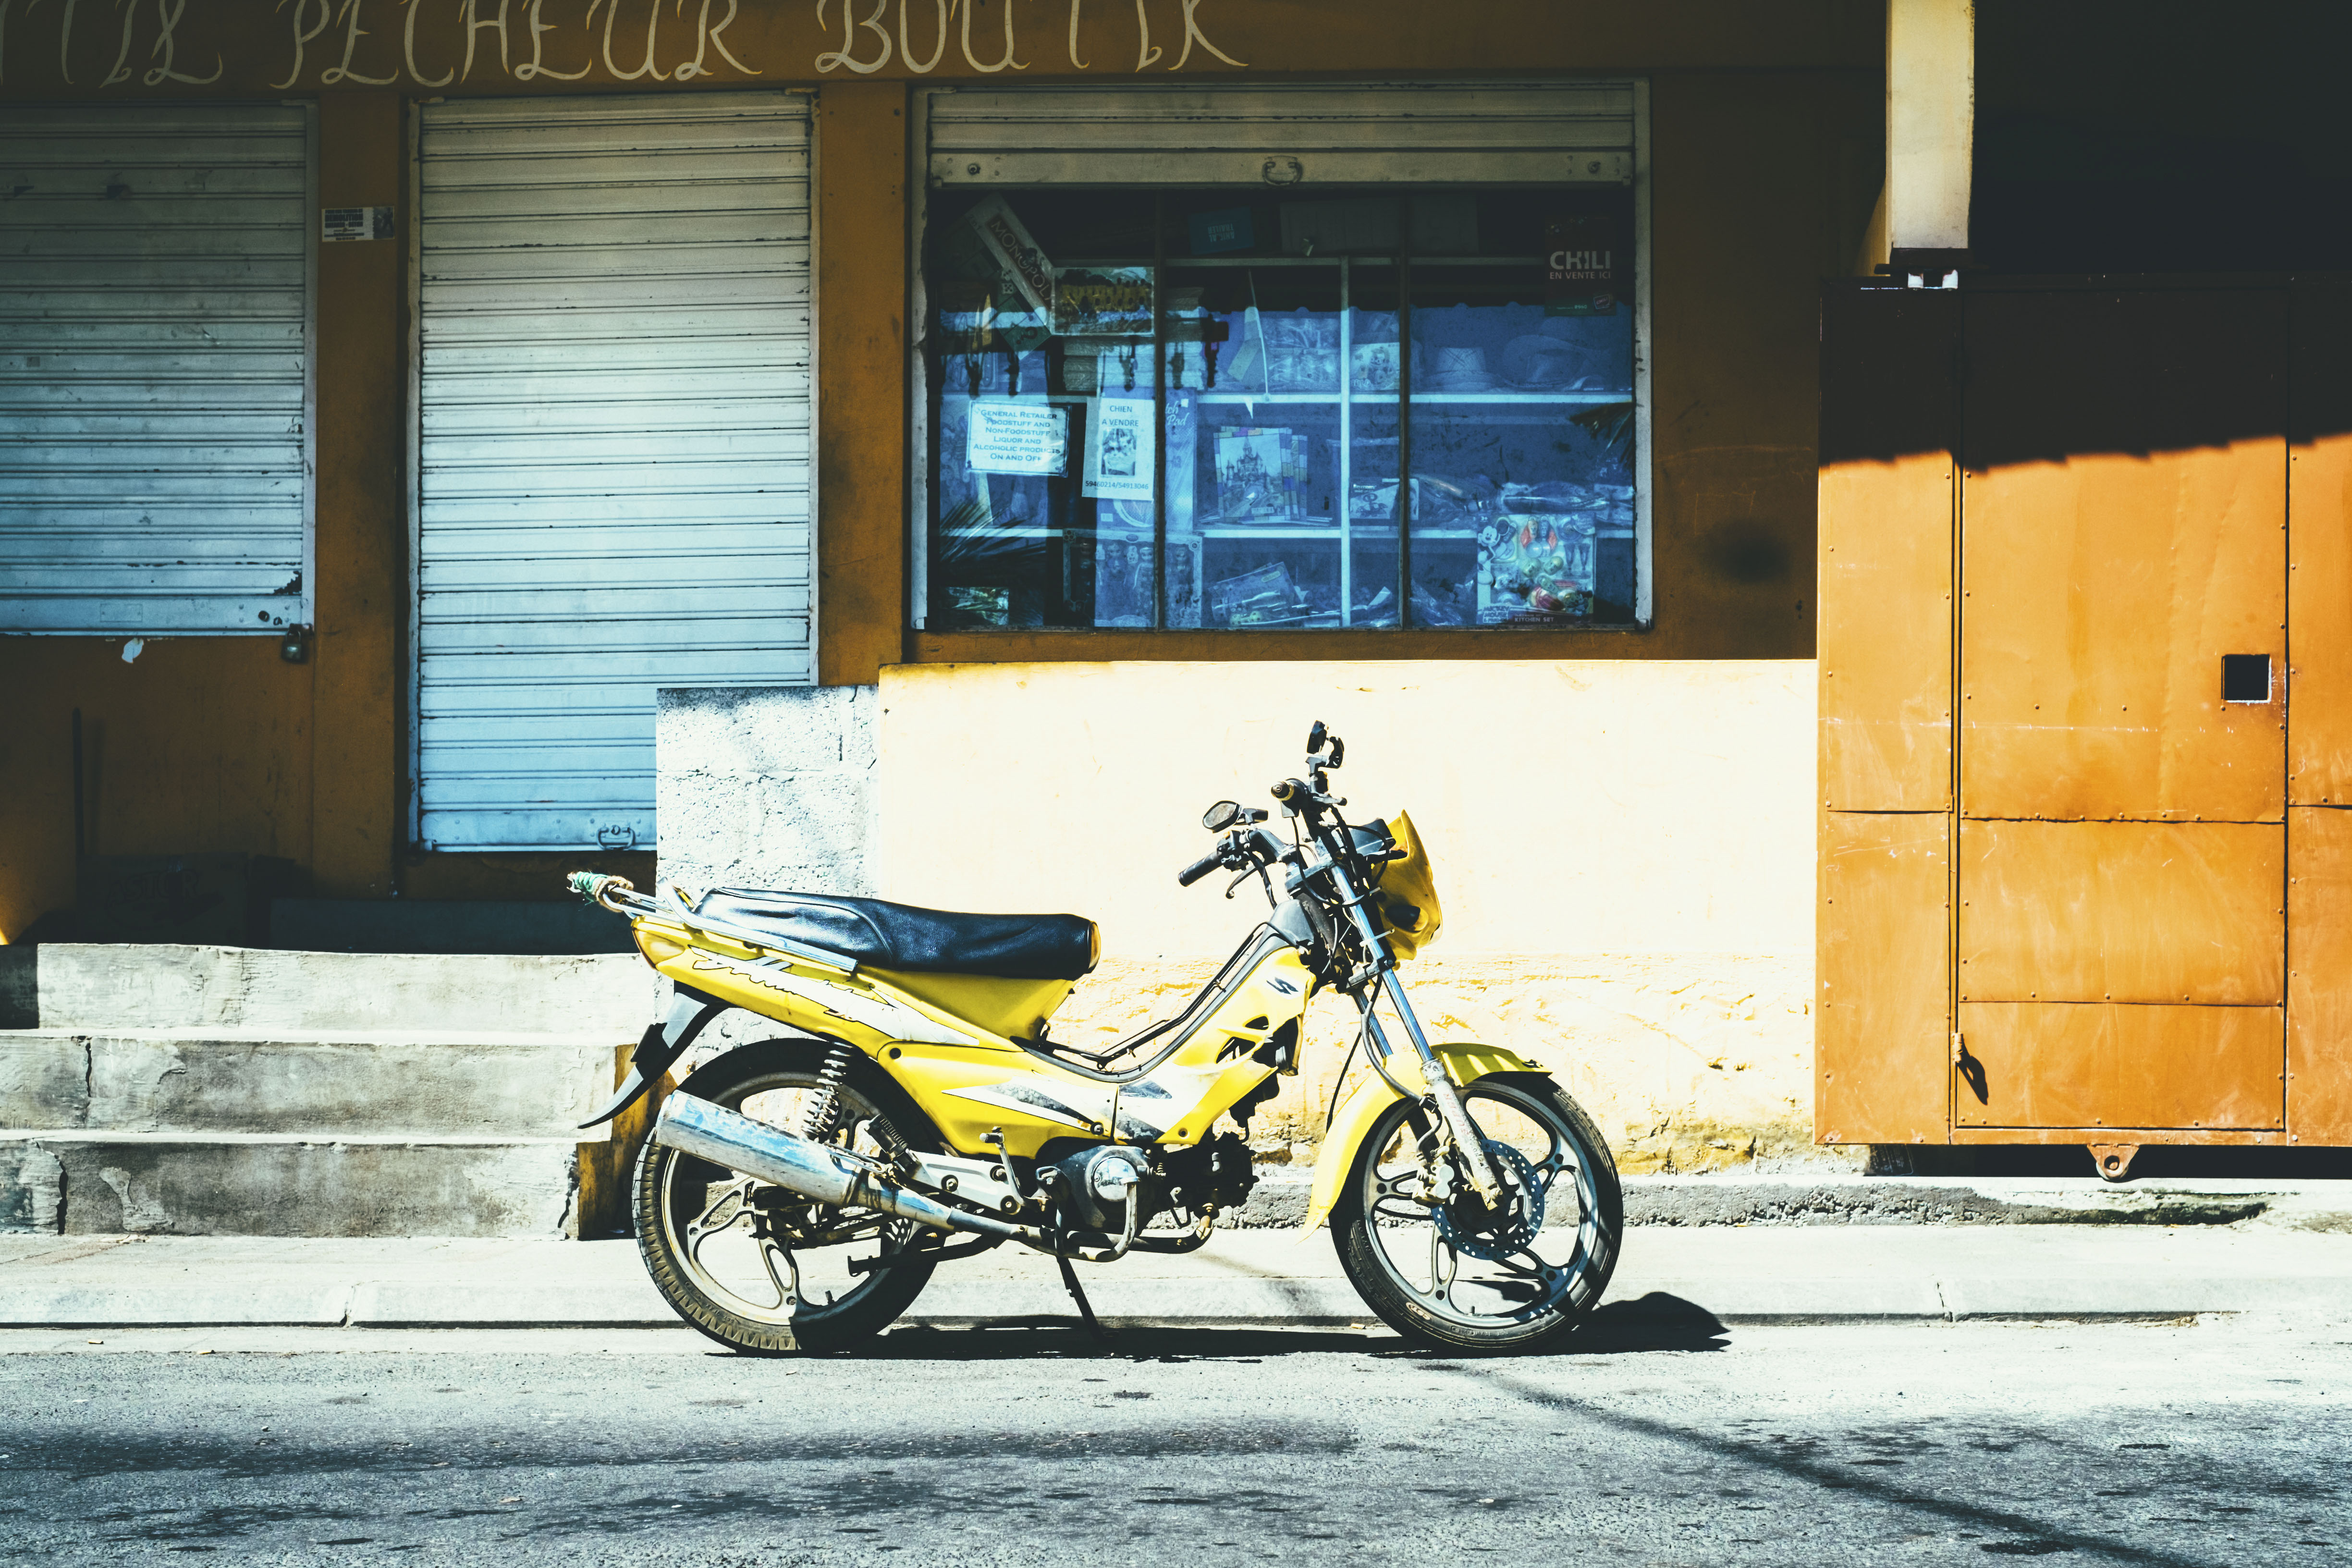 Скачать картинку Мотоцикл, Улица, Желтый, Мотоциклы в телефон бесплатно.